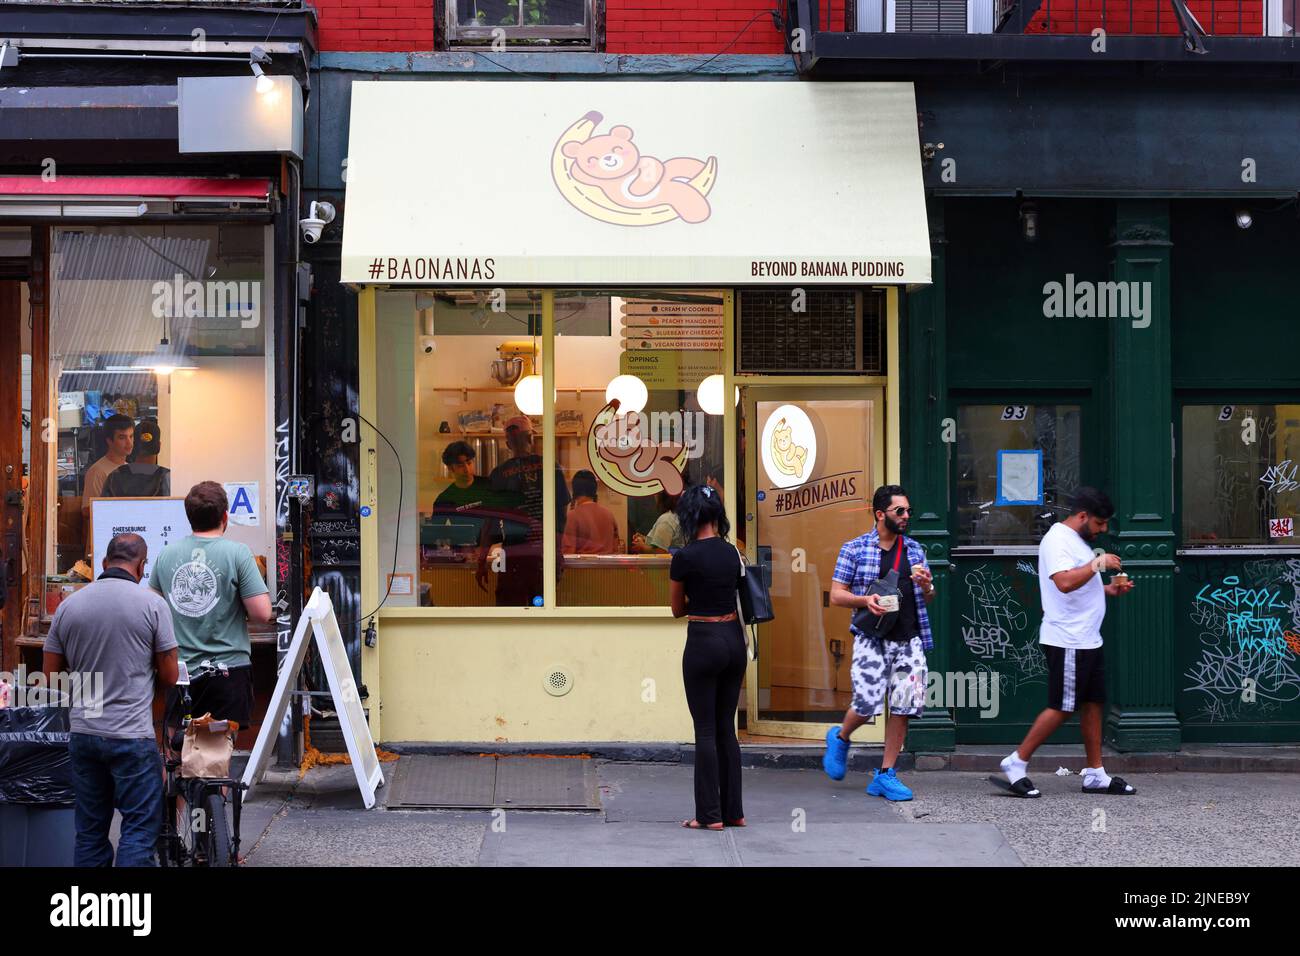 Baonanas, 93 E 7th St, New York, NYC storefront photo of a Filipino fusion banana pudding shop in Manhattan's East Village neighborhood. Stock Photo